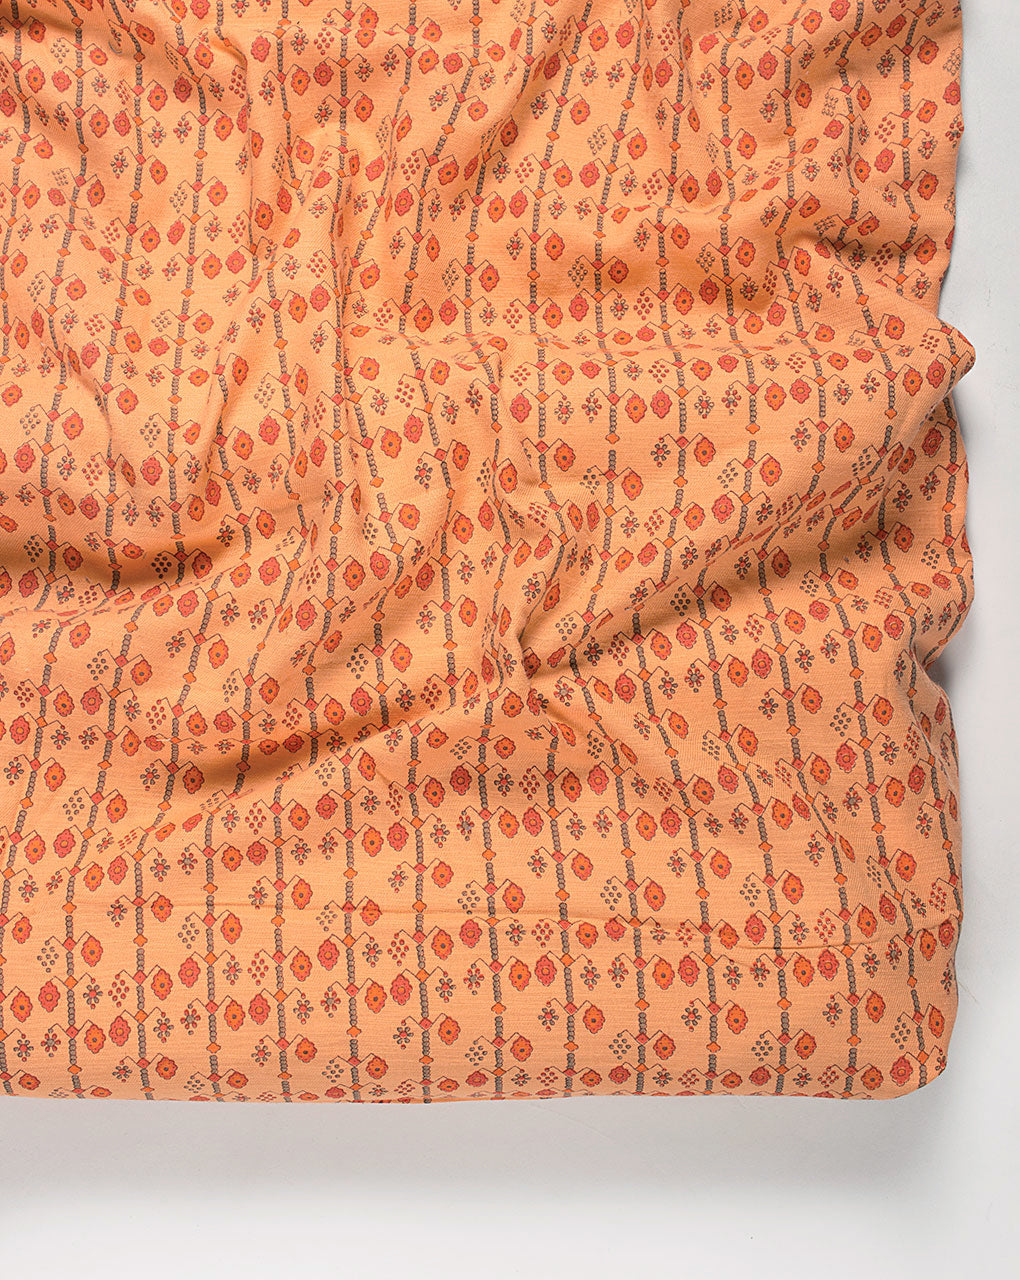 Screen Print Loom Textured Cotton Fabric